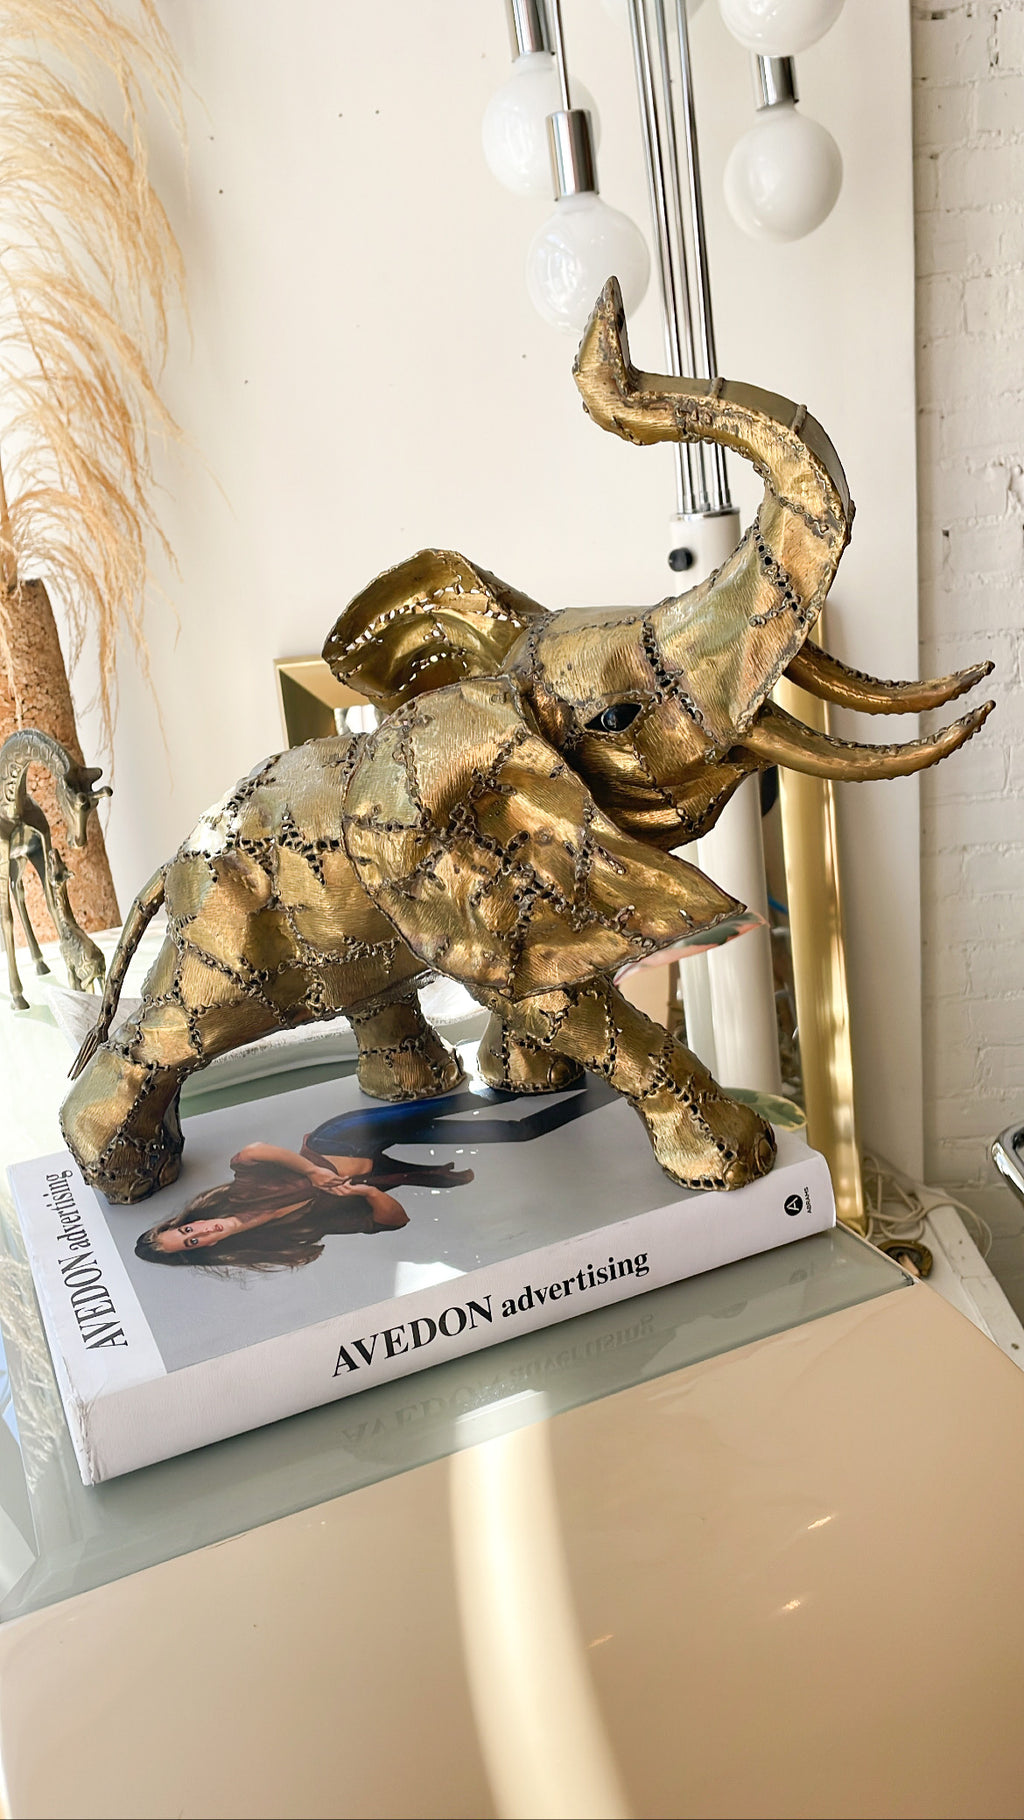 Antique Finished Brass Elephant Sculpture, 'Elephant Days